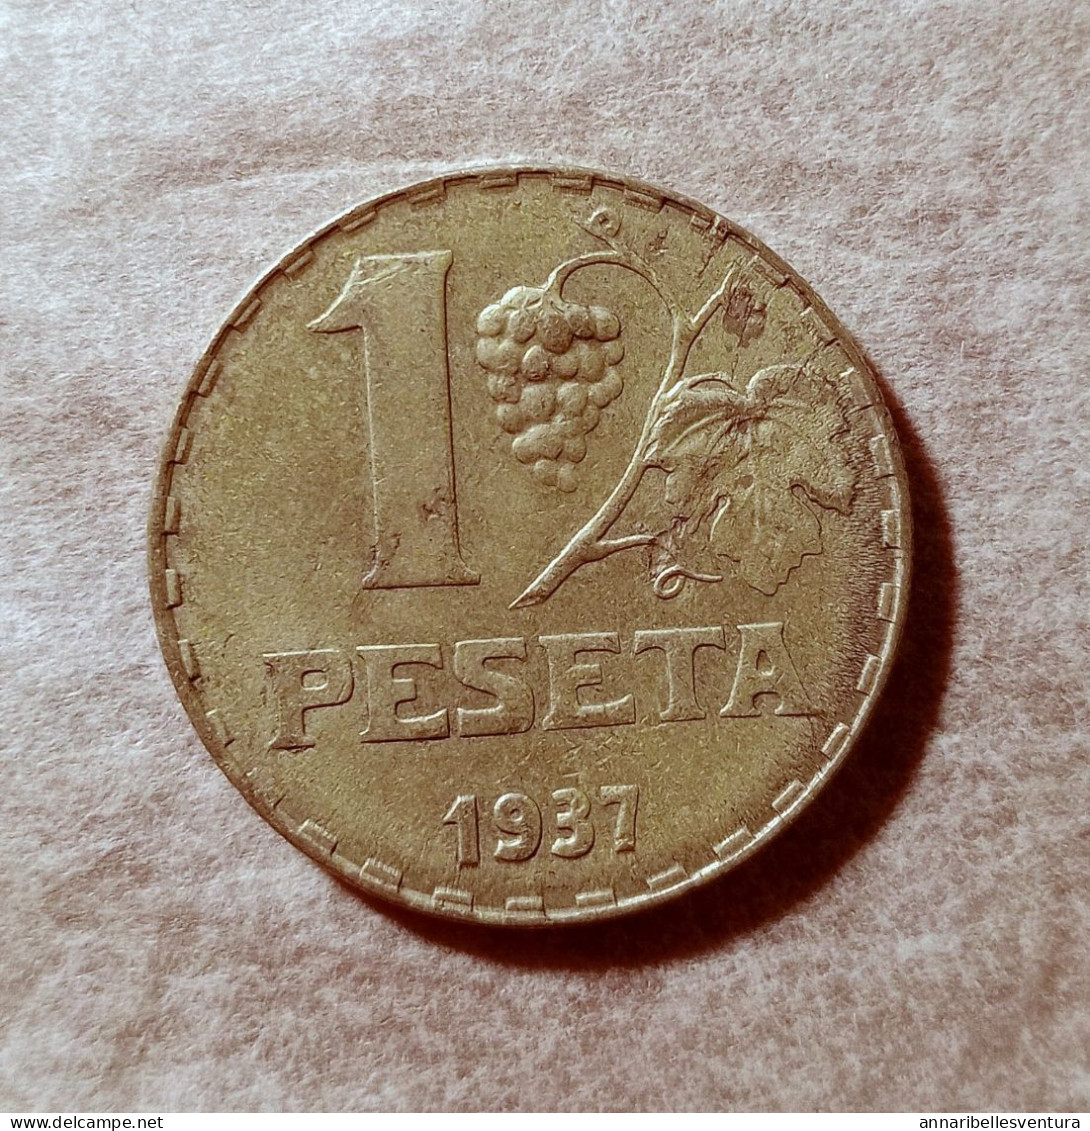 1 PESETA, ALFONSO XIII 1937. - Zone Républicaine